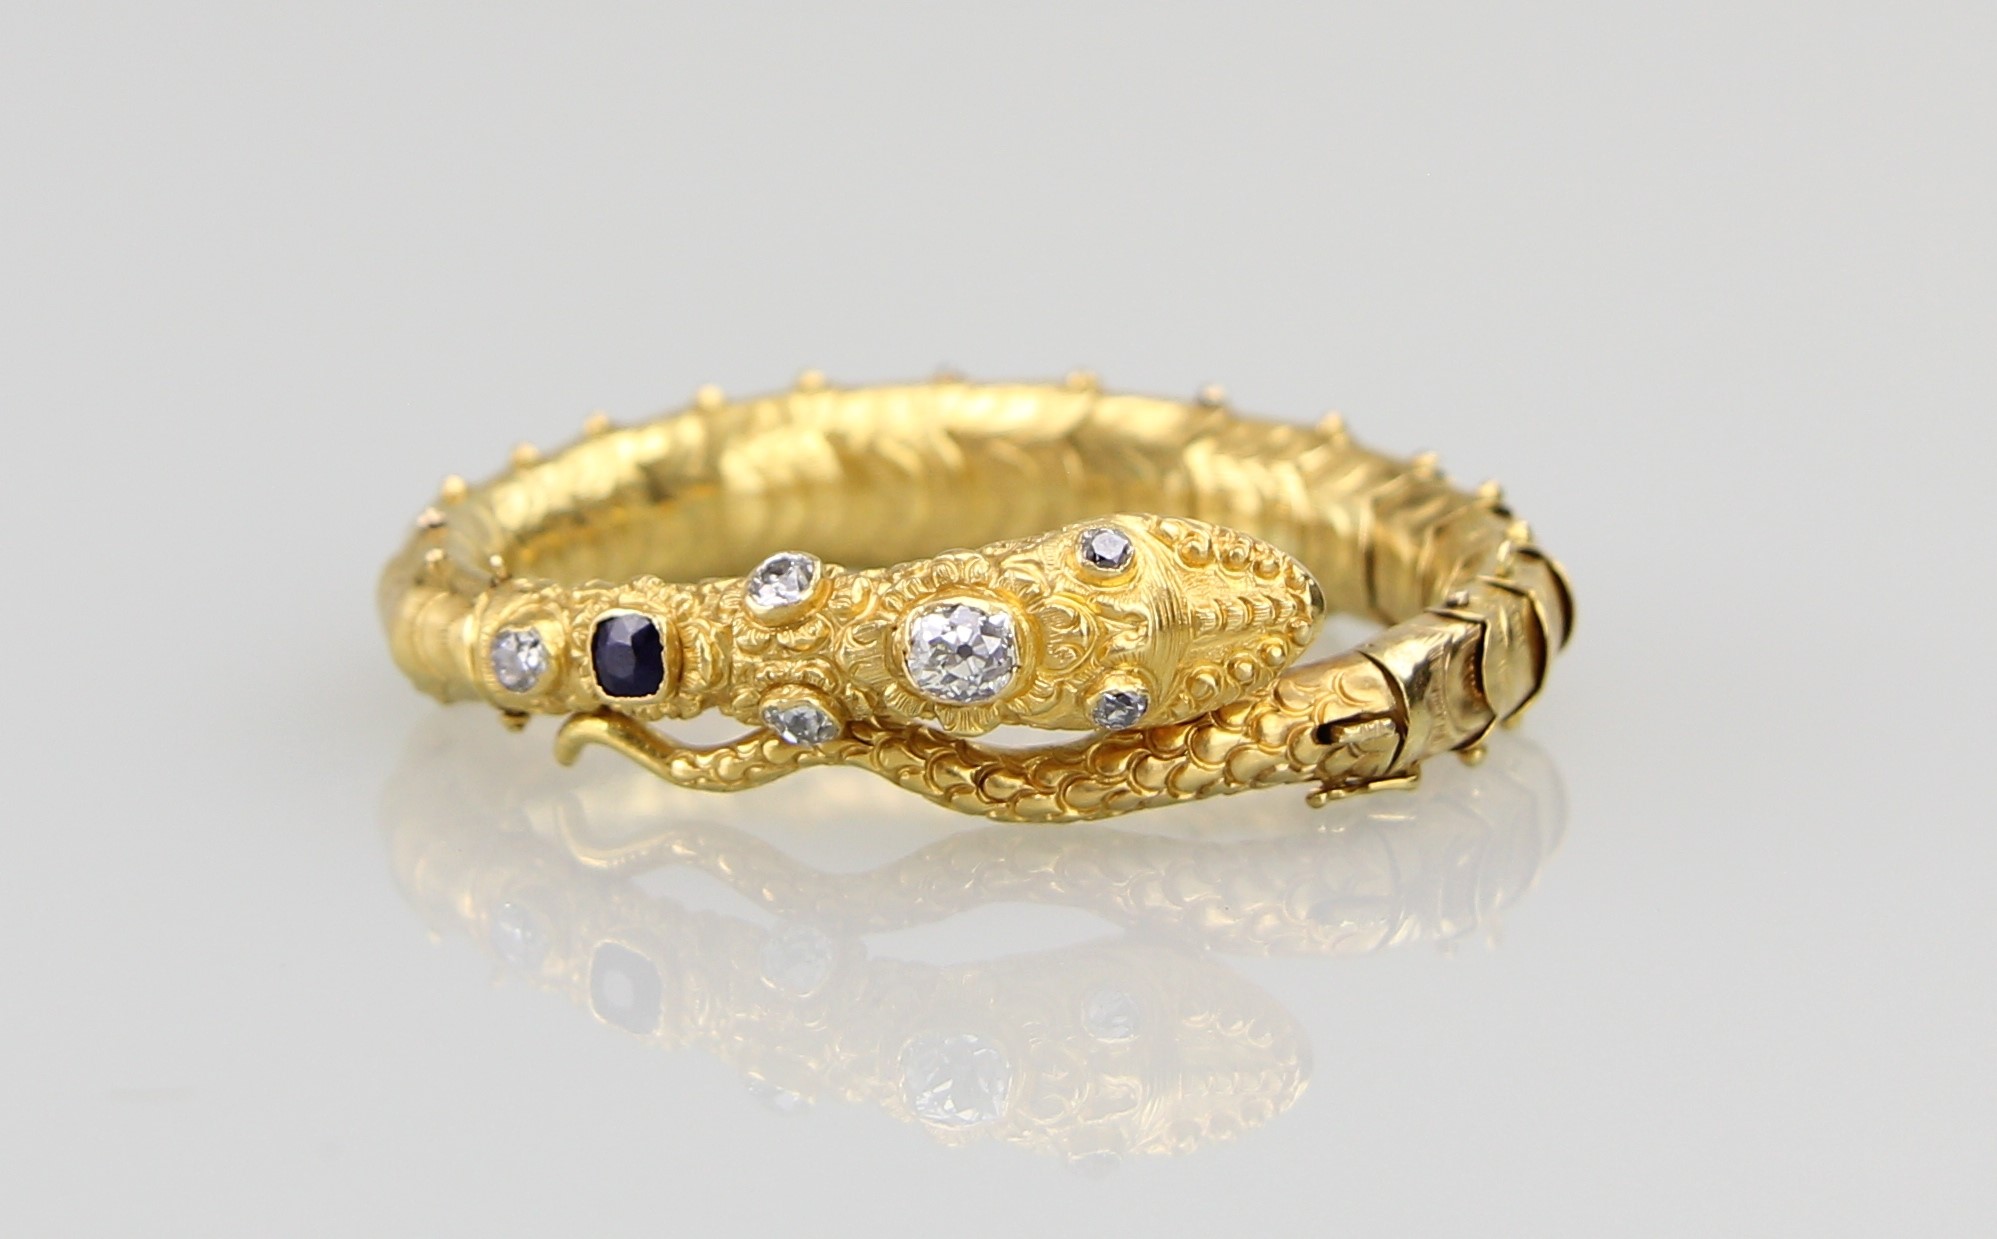 Goldarmband um 1840 mit Diamanten, Limit 3.500 €